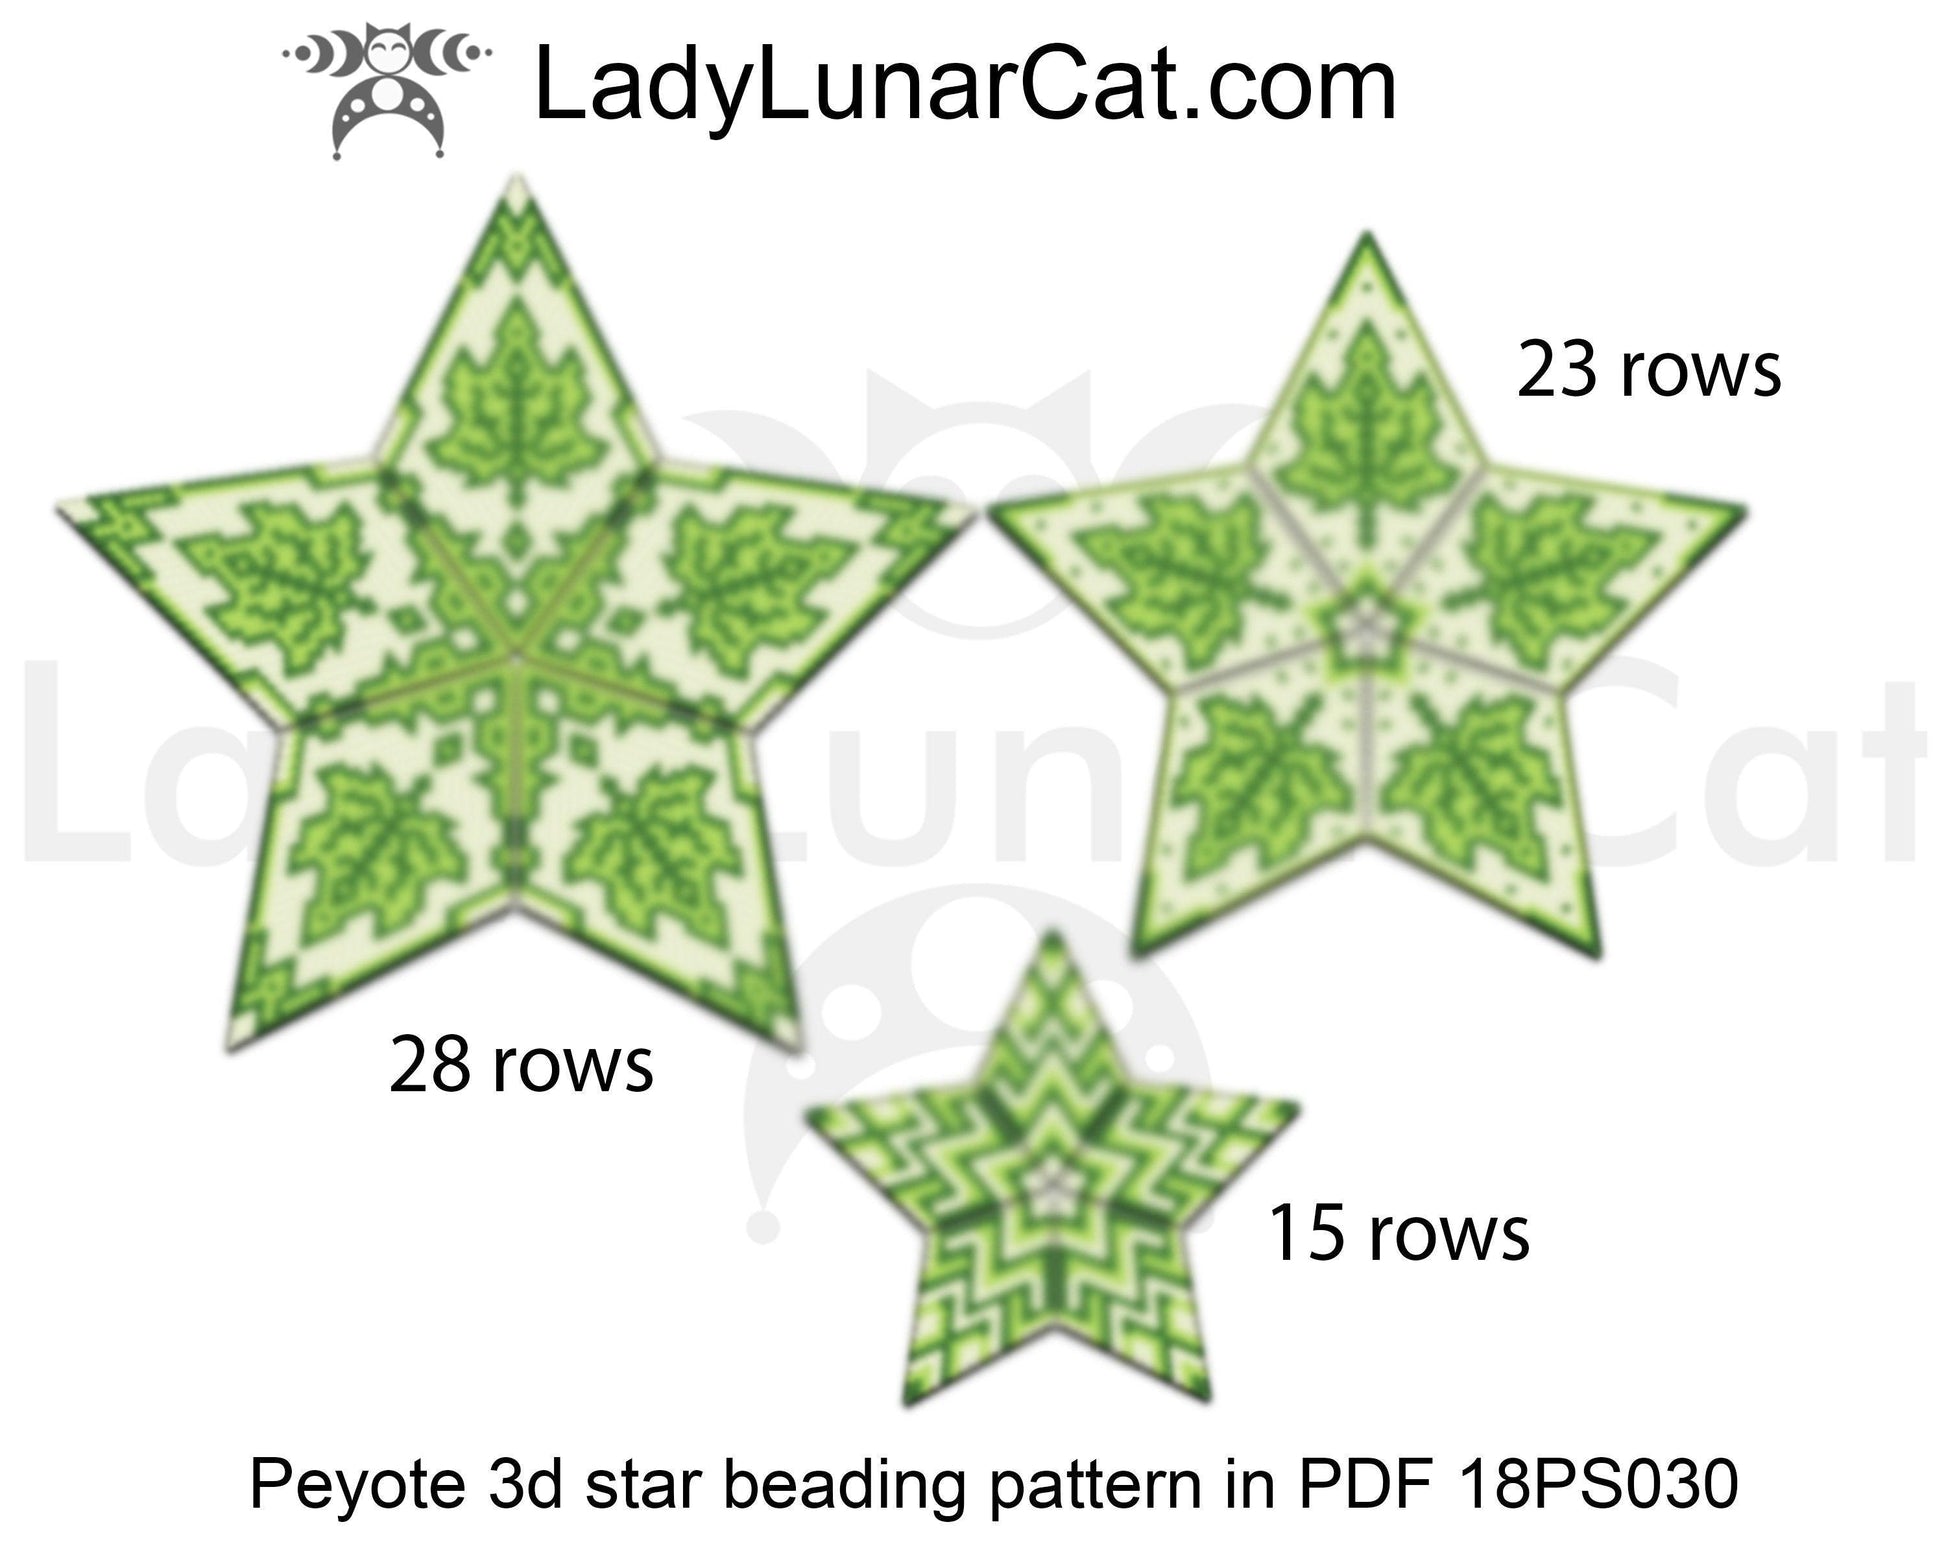 Peyote star patterns for beading green Spring leaves 18PS030. LadyLunarCat